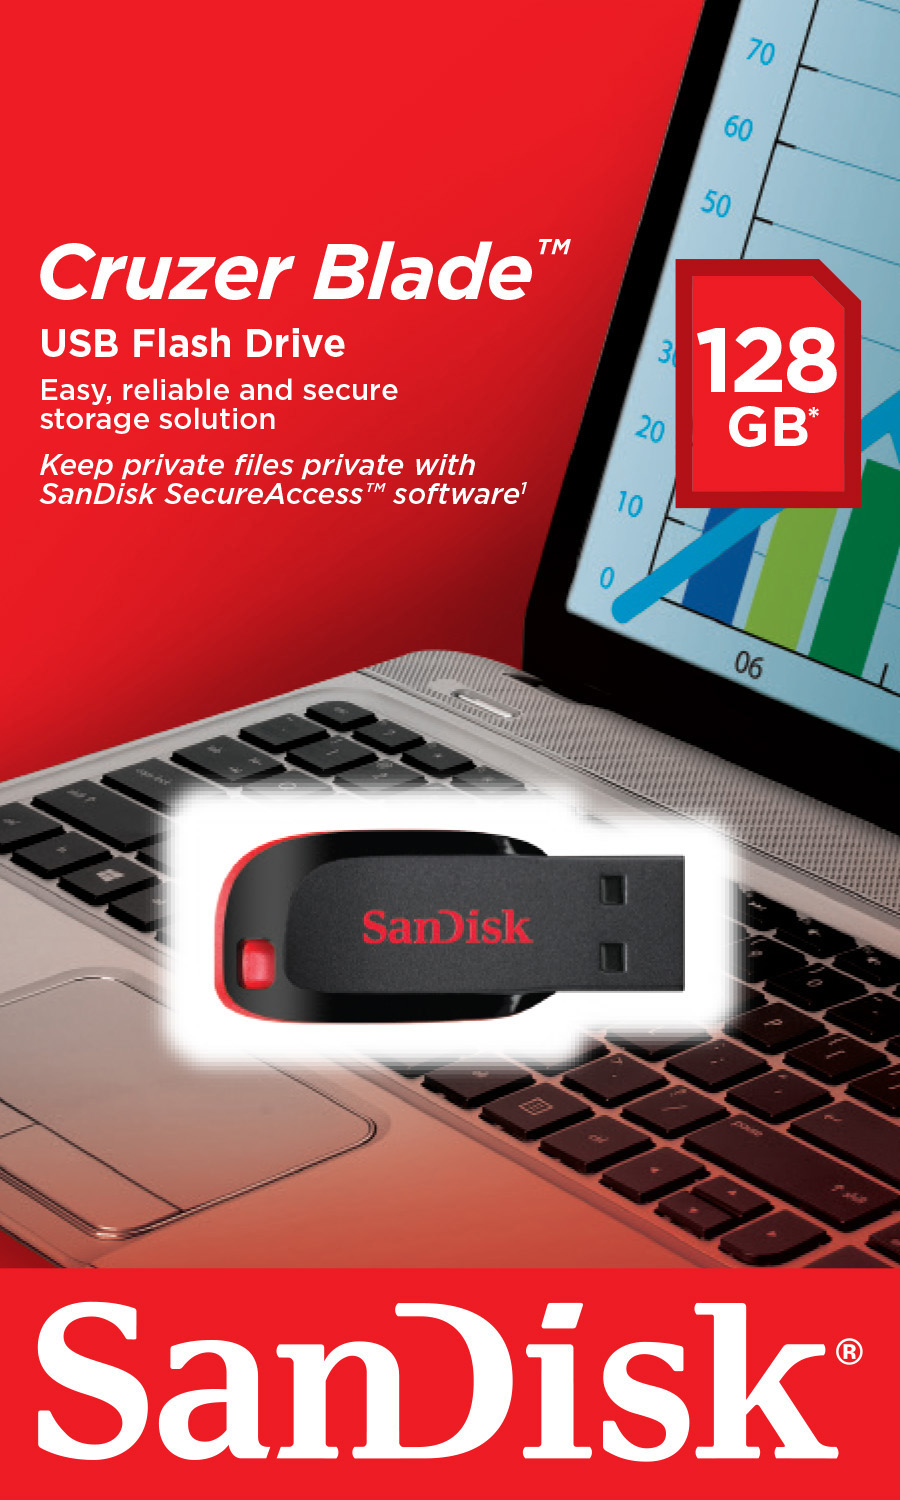 Schwarz/Rot Blade 128 SANDISK GB, Cruzer USB-Stick,